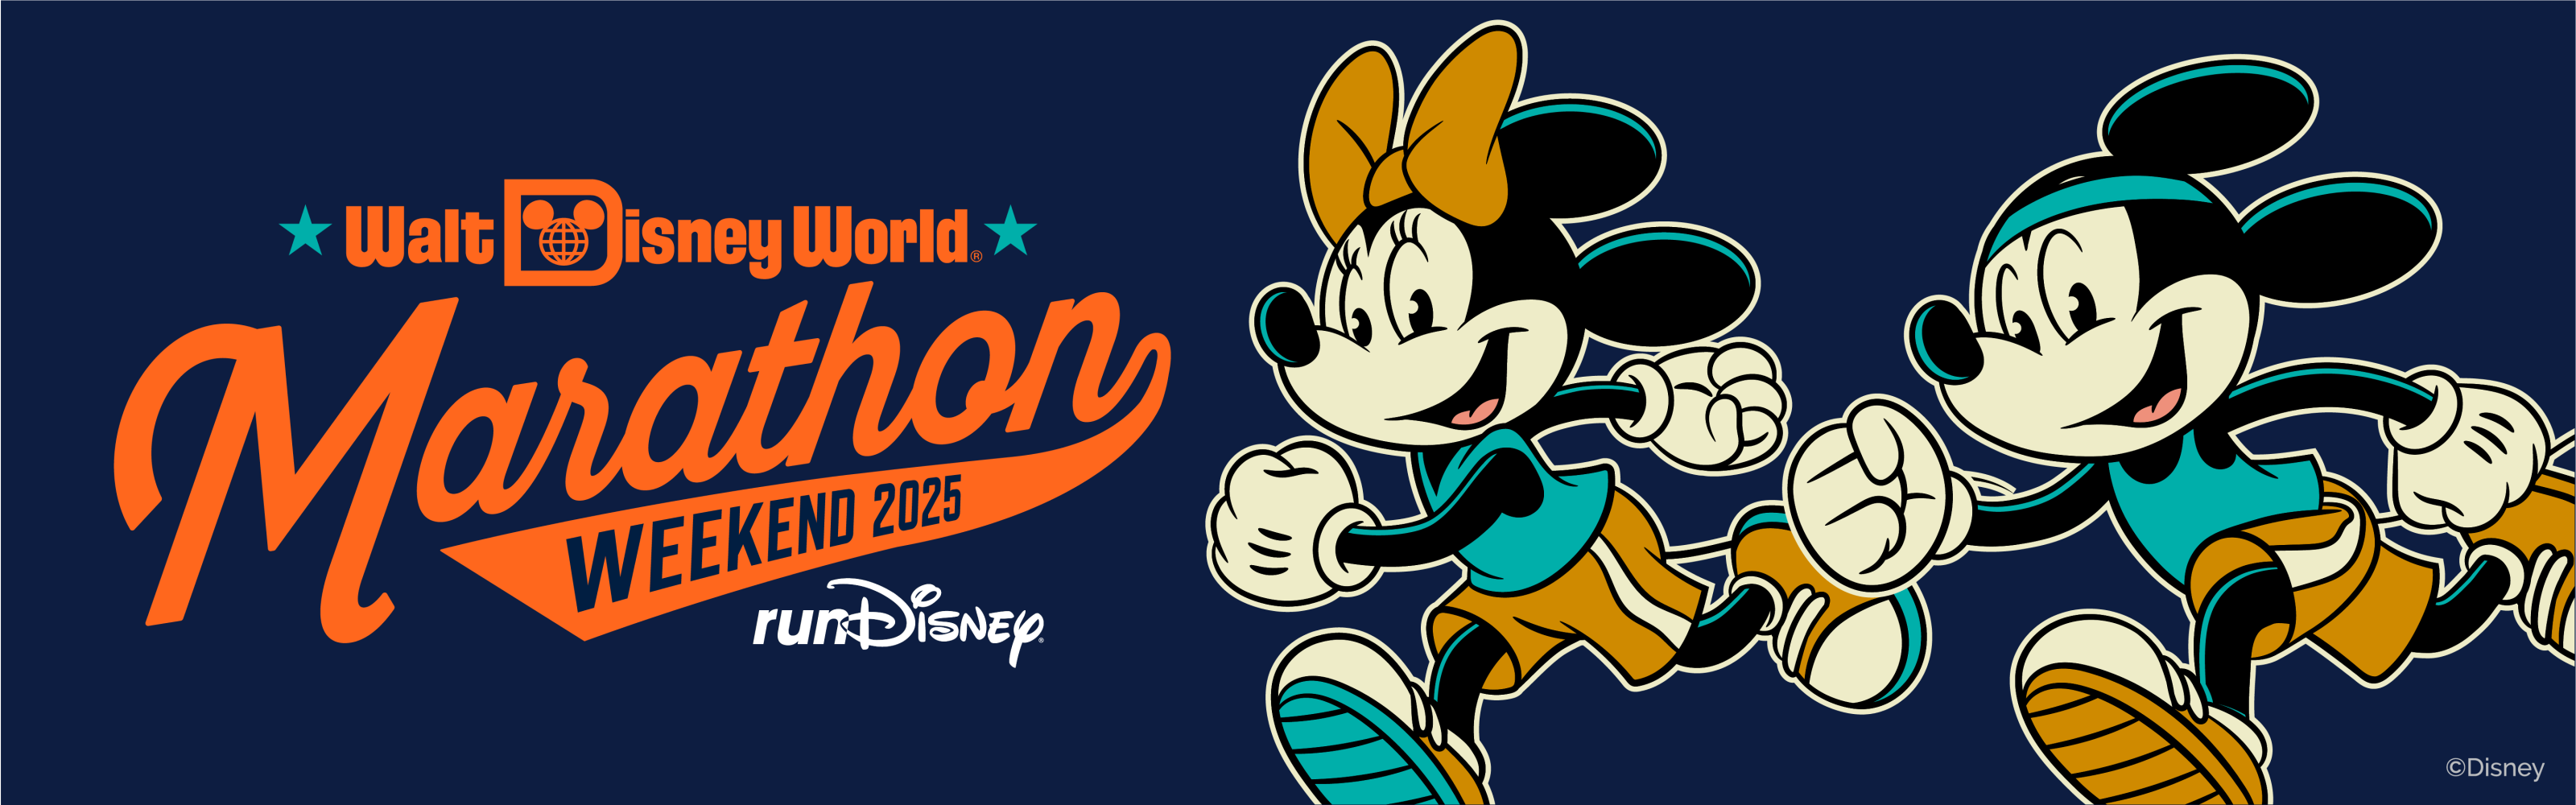 New Mickey & Minnie and Walt Disney World Apparel Available - WDW News Today